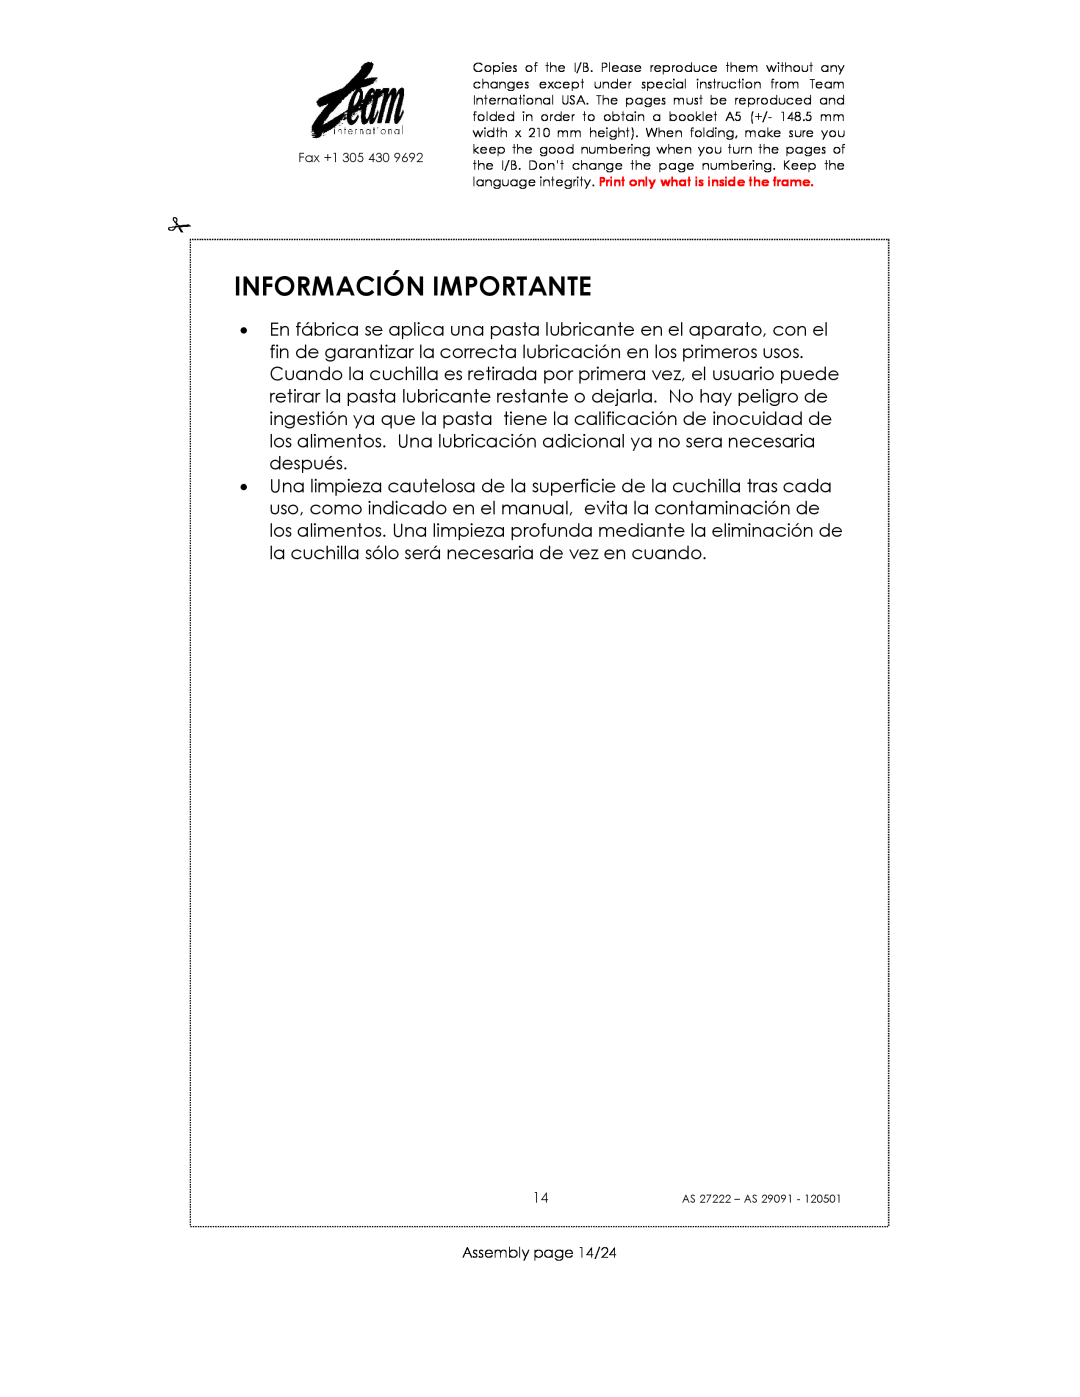 Kalorik AS 29091, AS 27222 manual Información Importante, Assembly page 14/24 